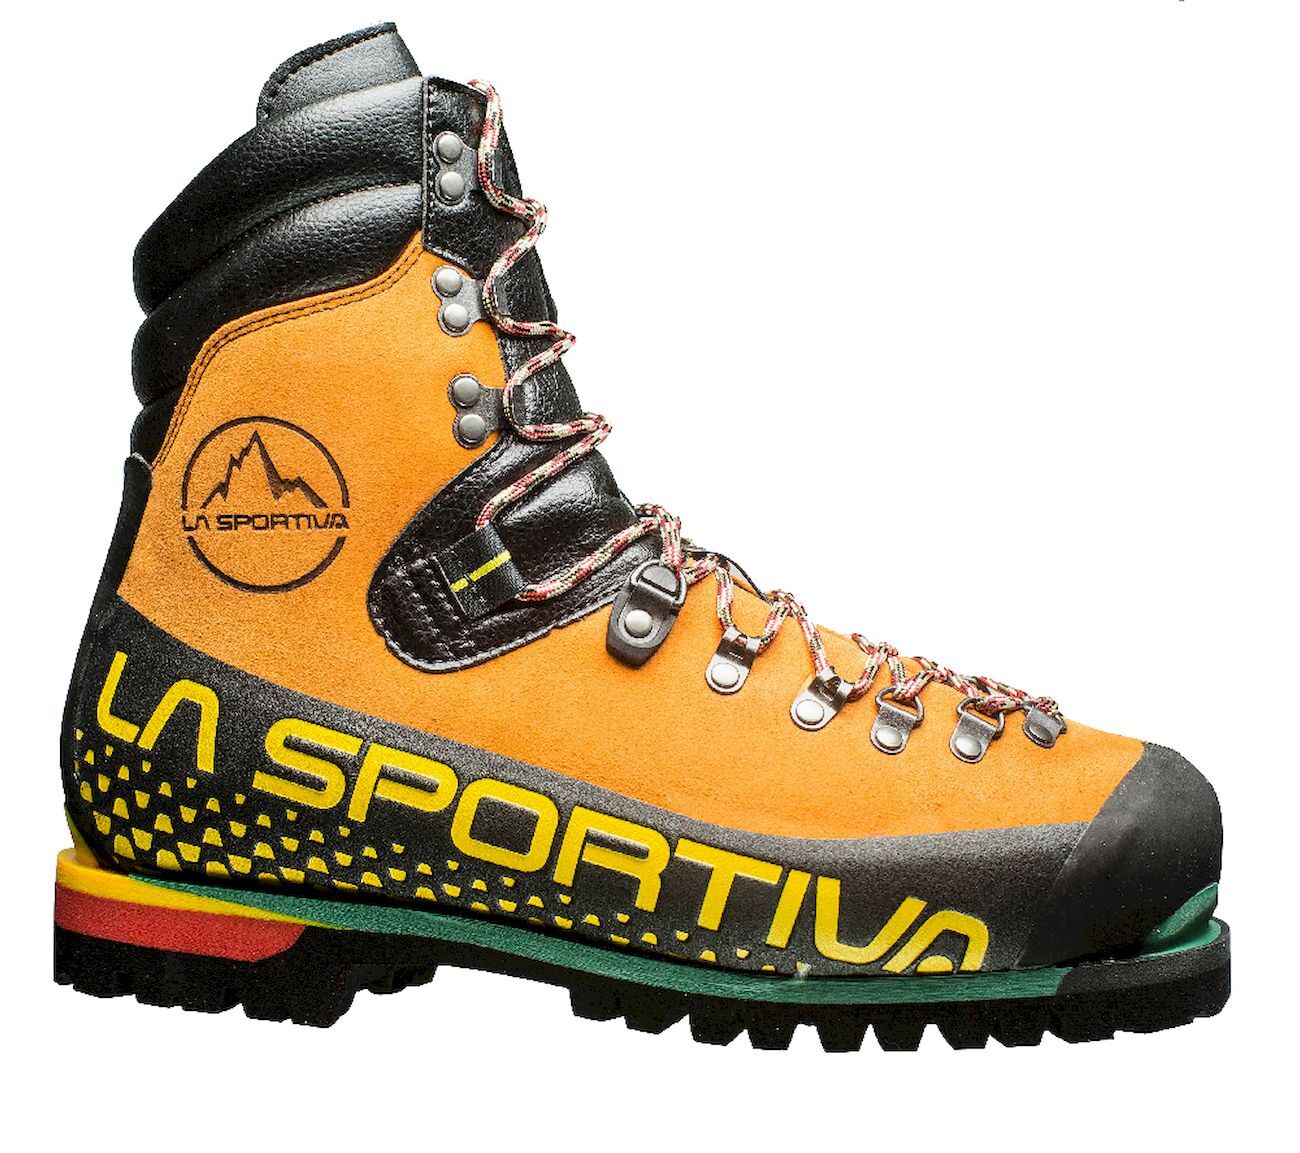 La Sportiva Nepal Extreme Work - Schuhe - Herren